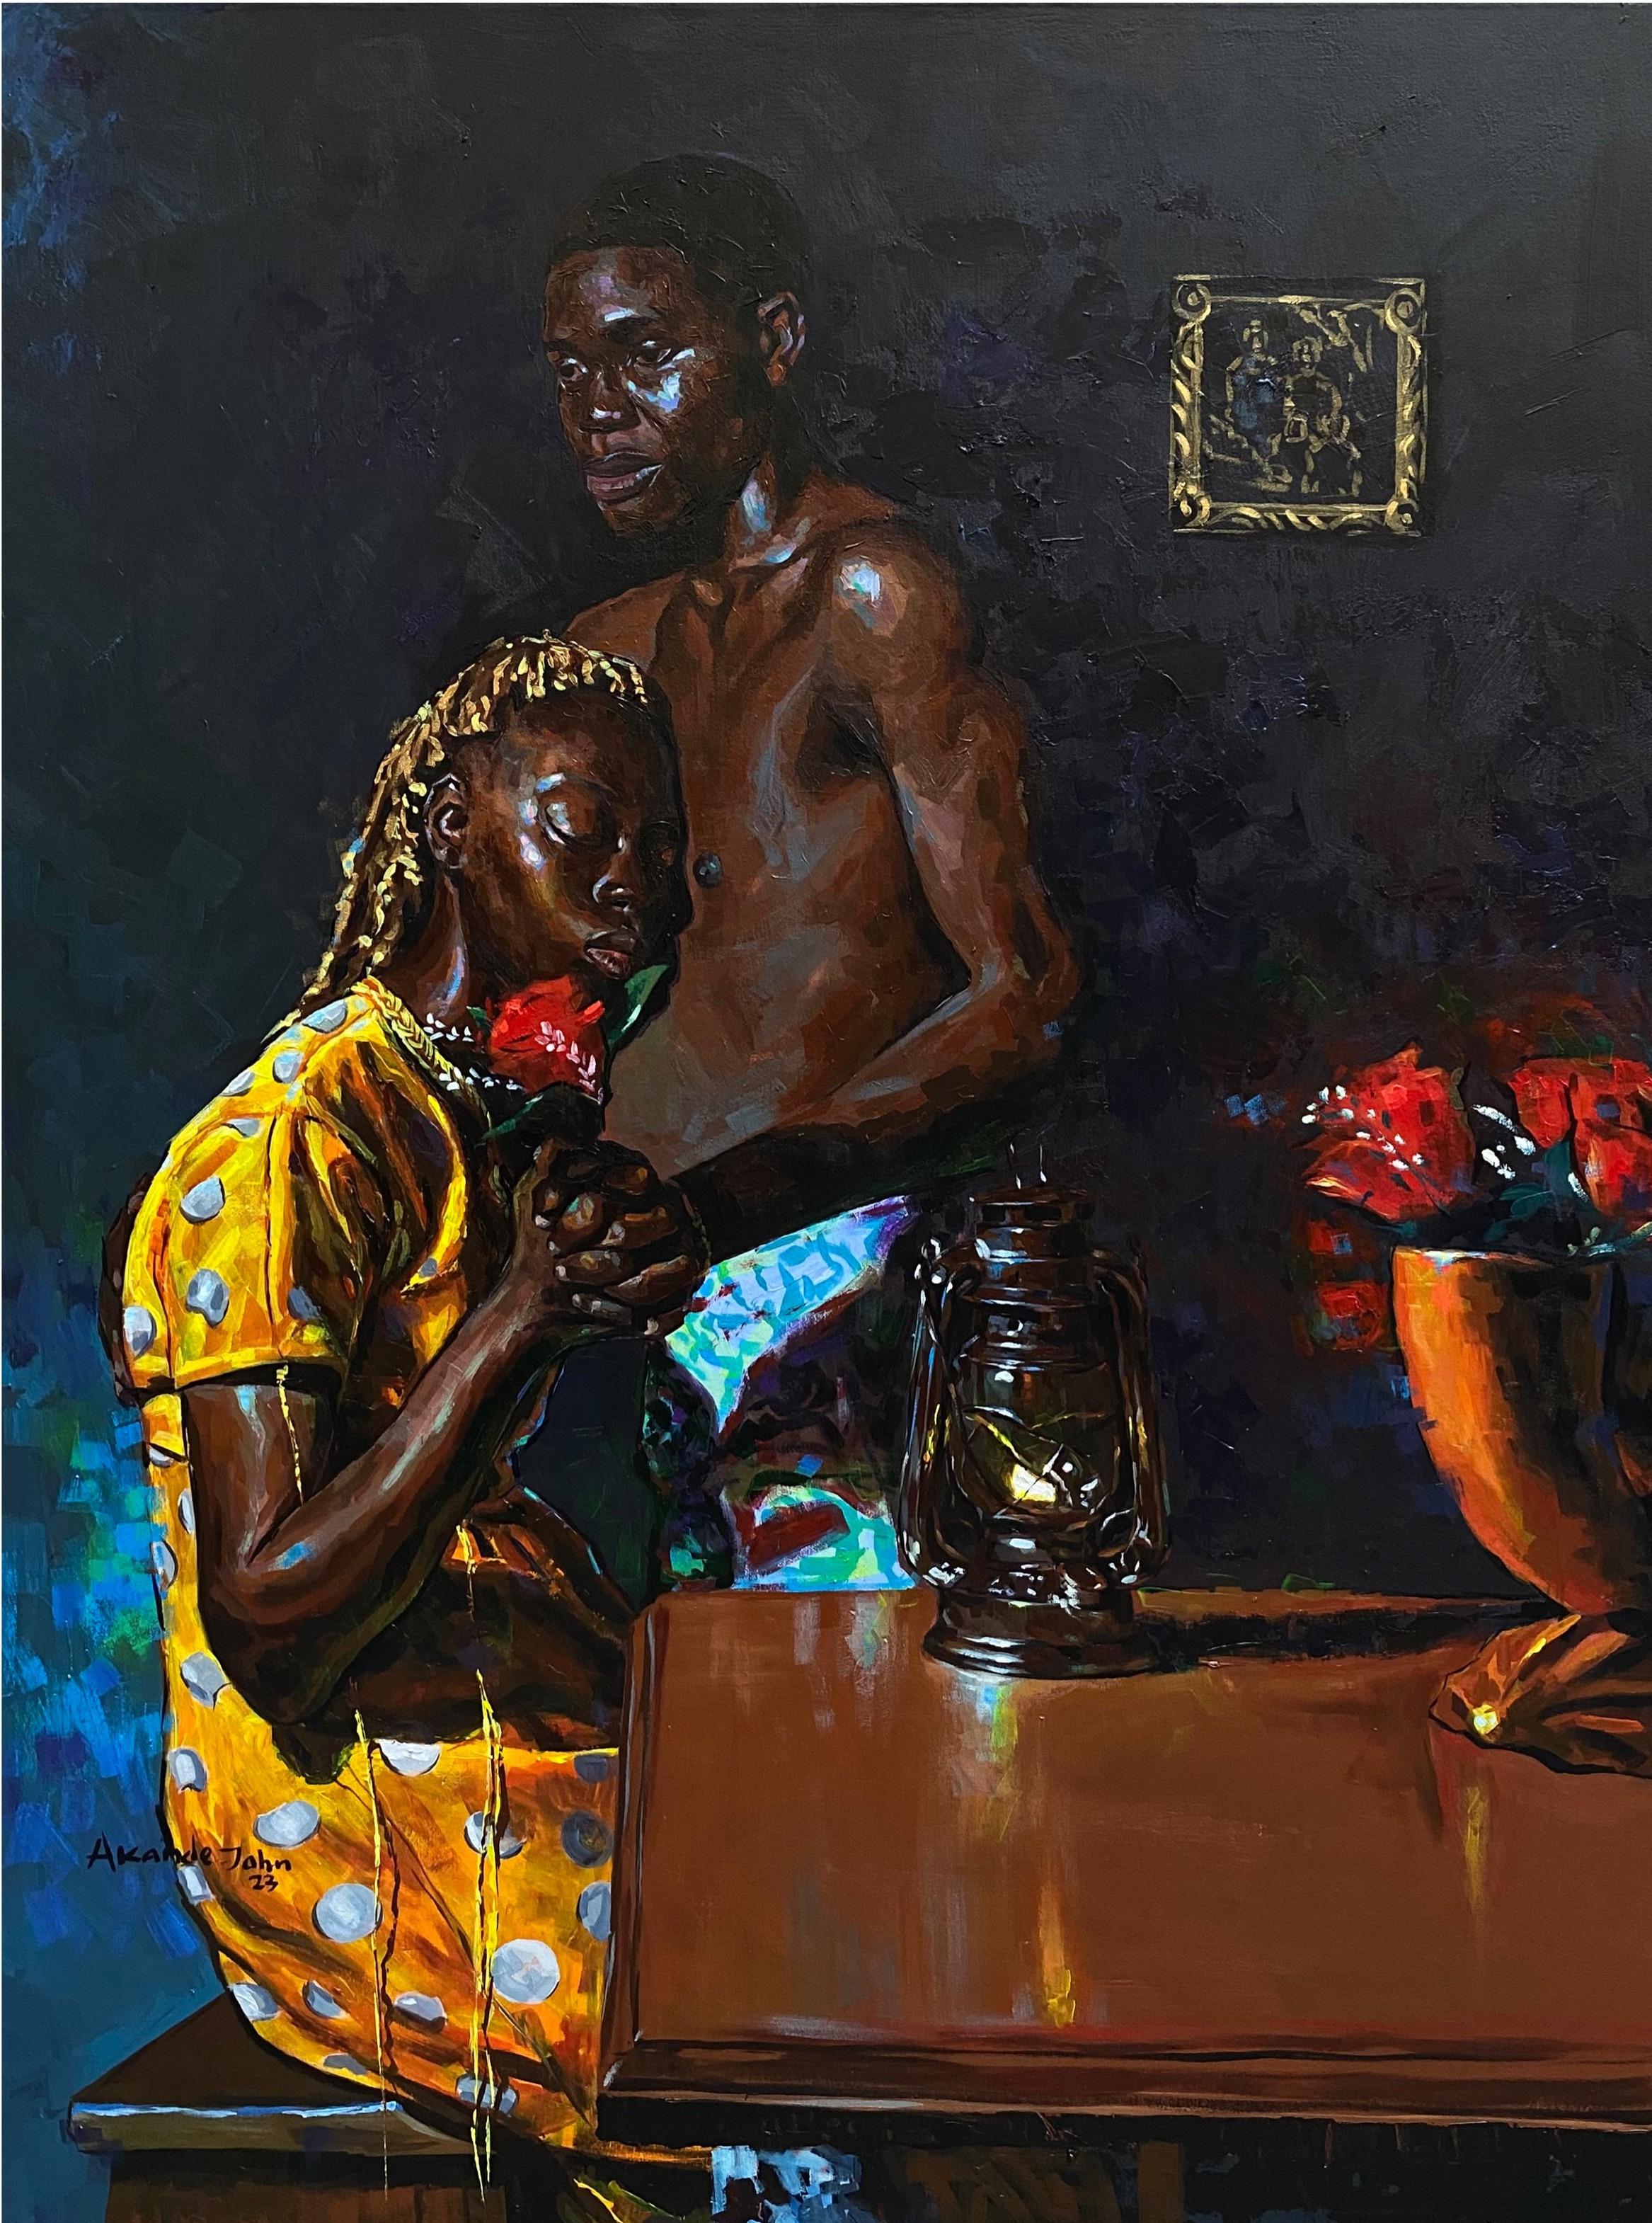 Akande John Figurative Painting - Finding Something True 2